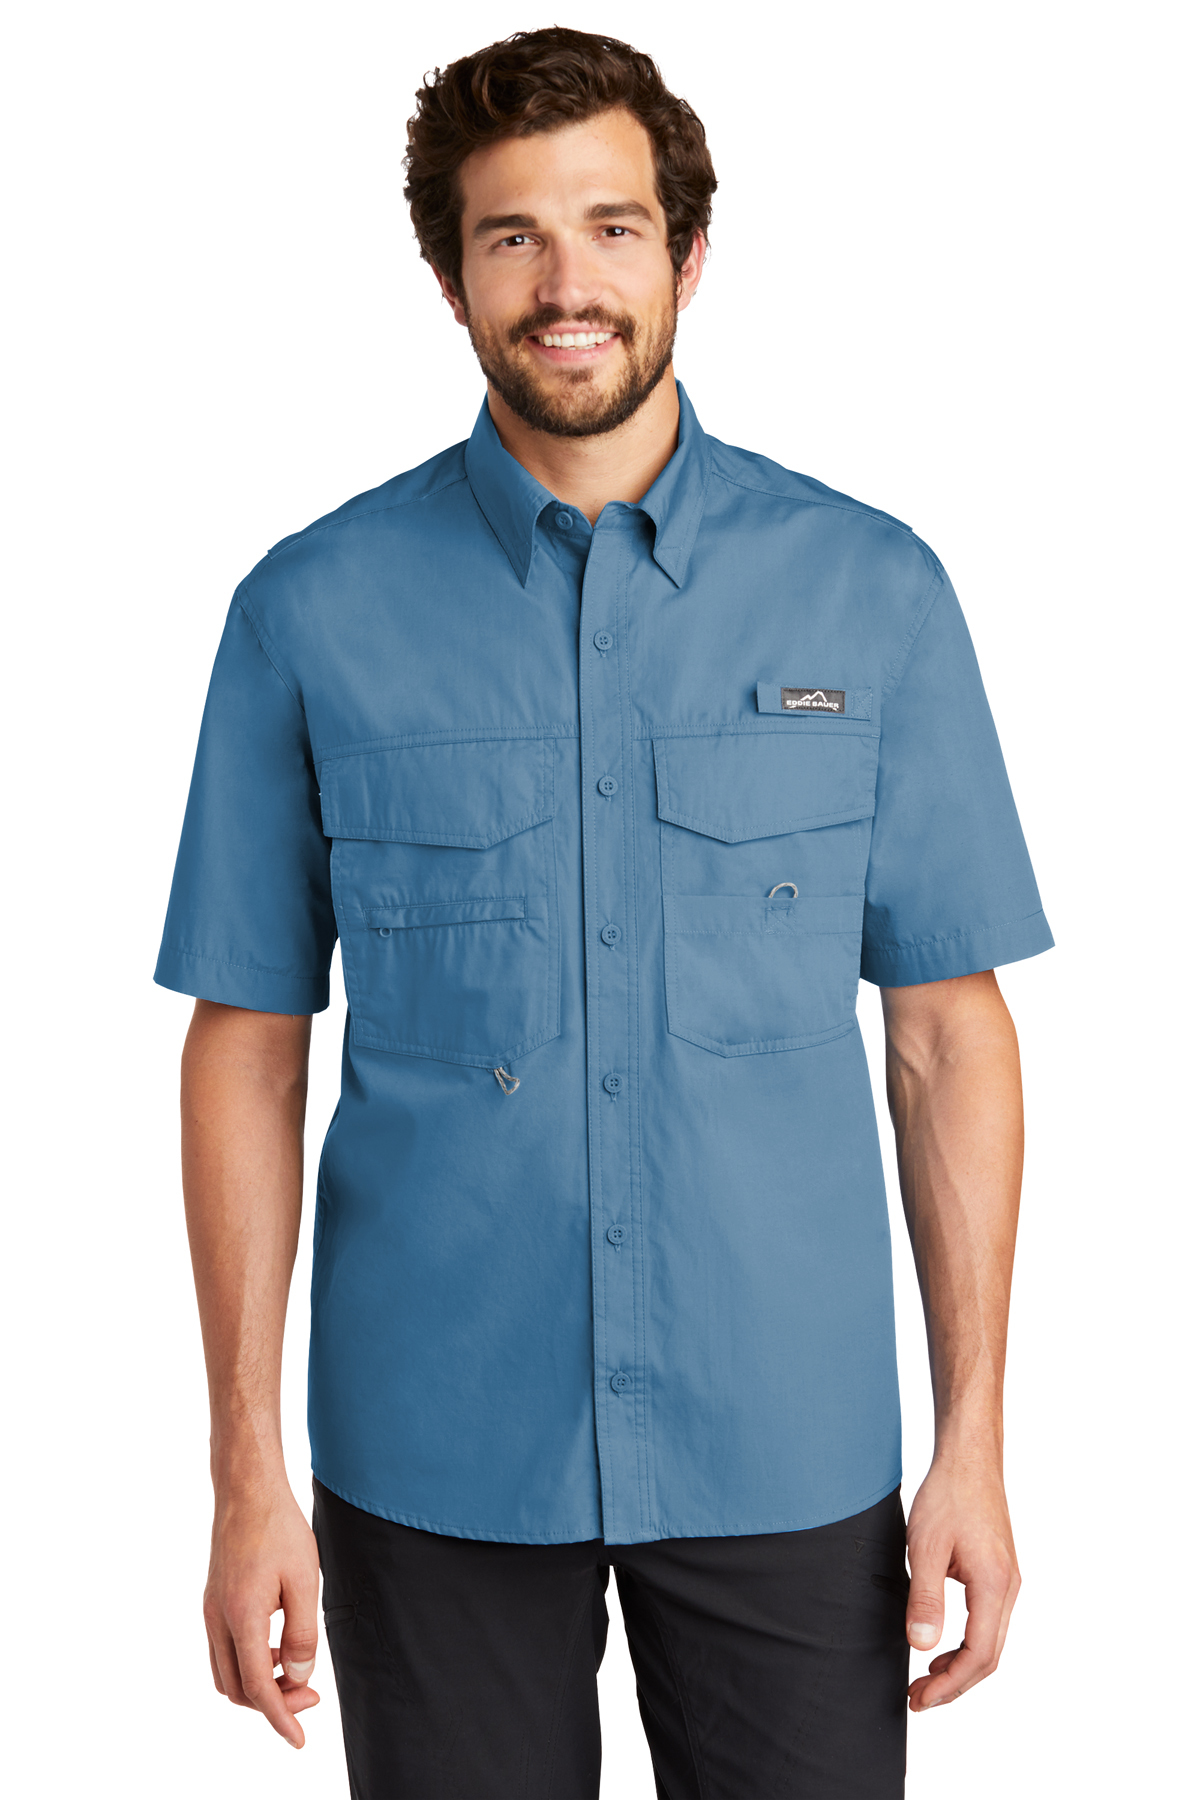 Eddie Bauer - Short Sleeve Fishing Shirt | Product | SanMar